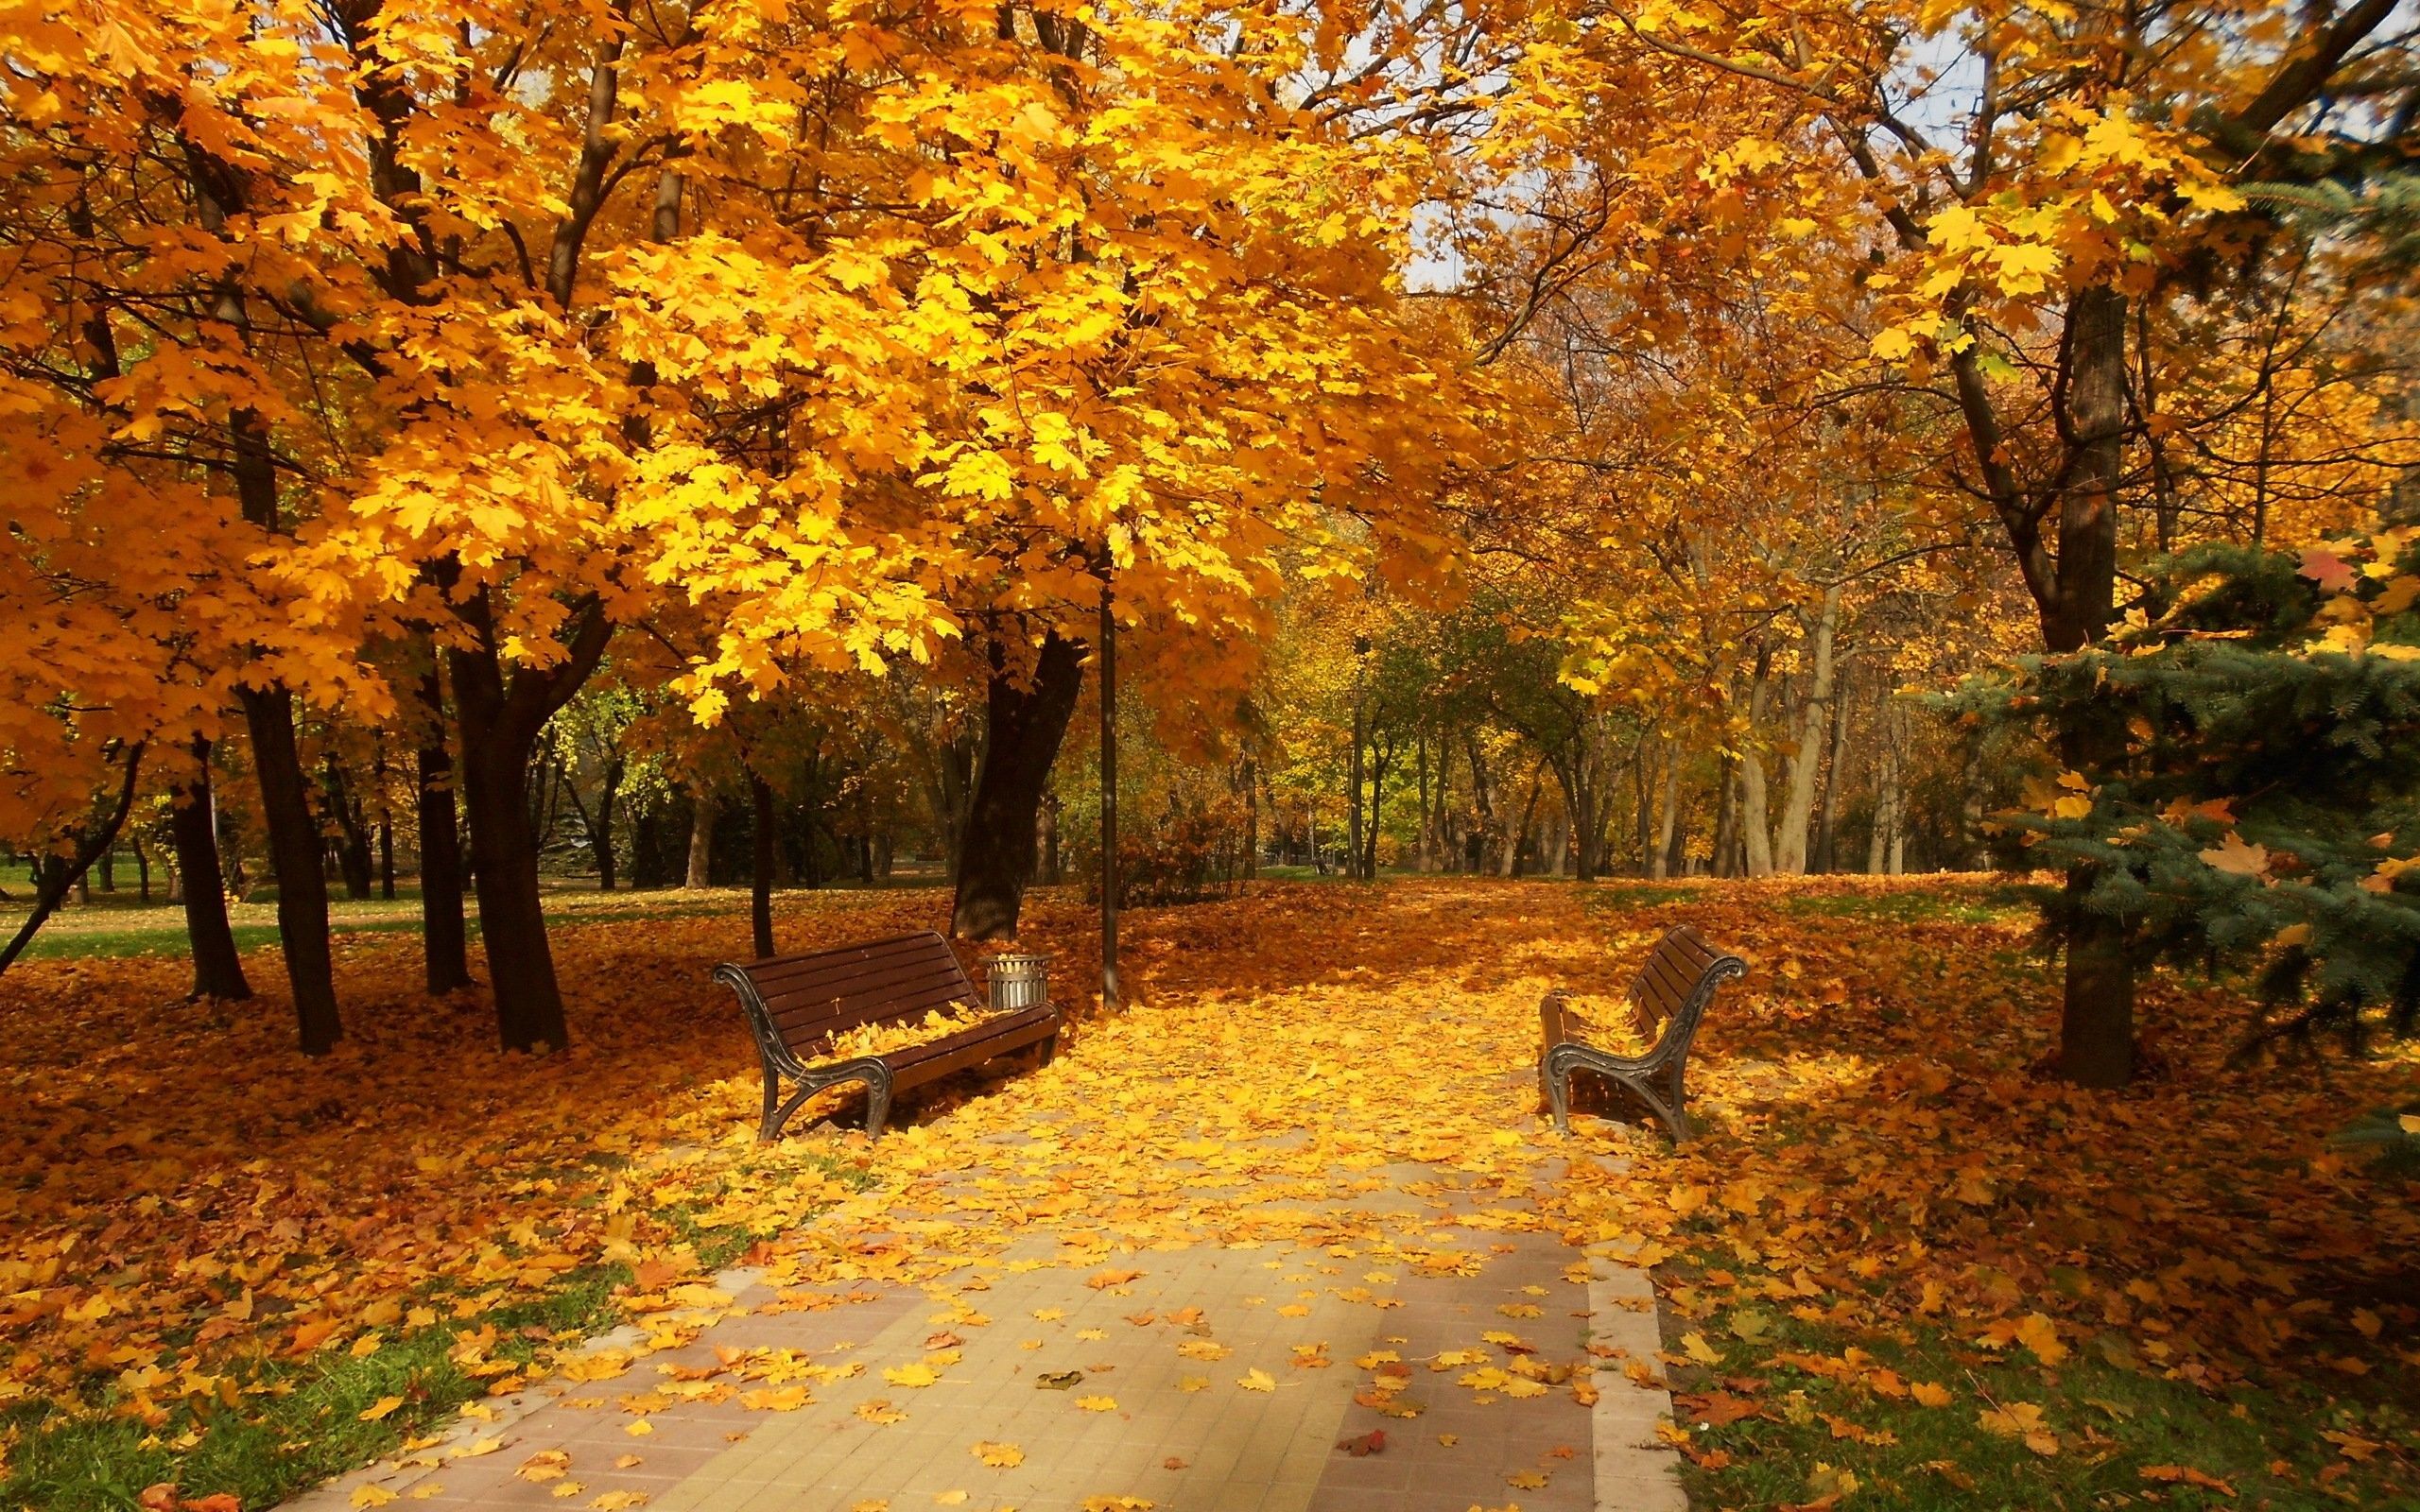 Walk, Fall, Forest, Nature Wallpaper, Road, Leaves, path, Autumn, Colors, Colorful, HD Wallpaper, Nature, Splendor, Natural Trees, Park, Aut